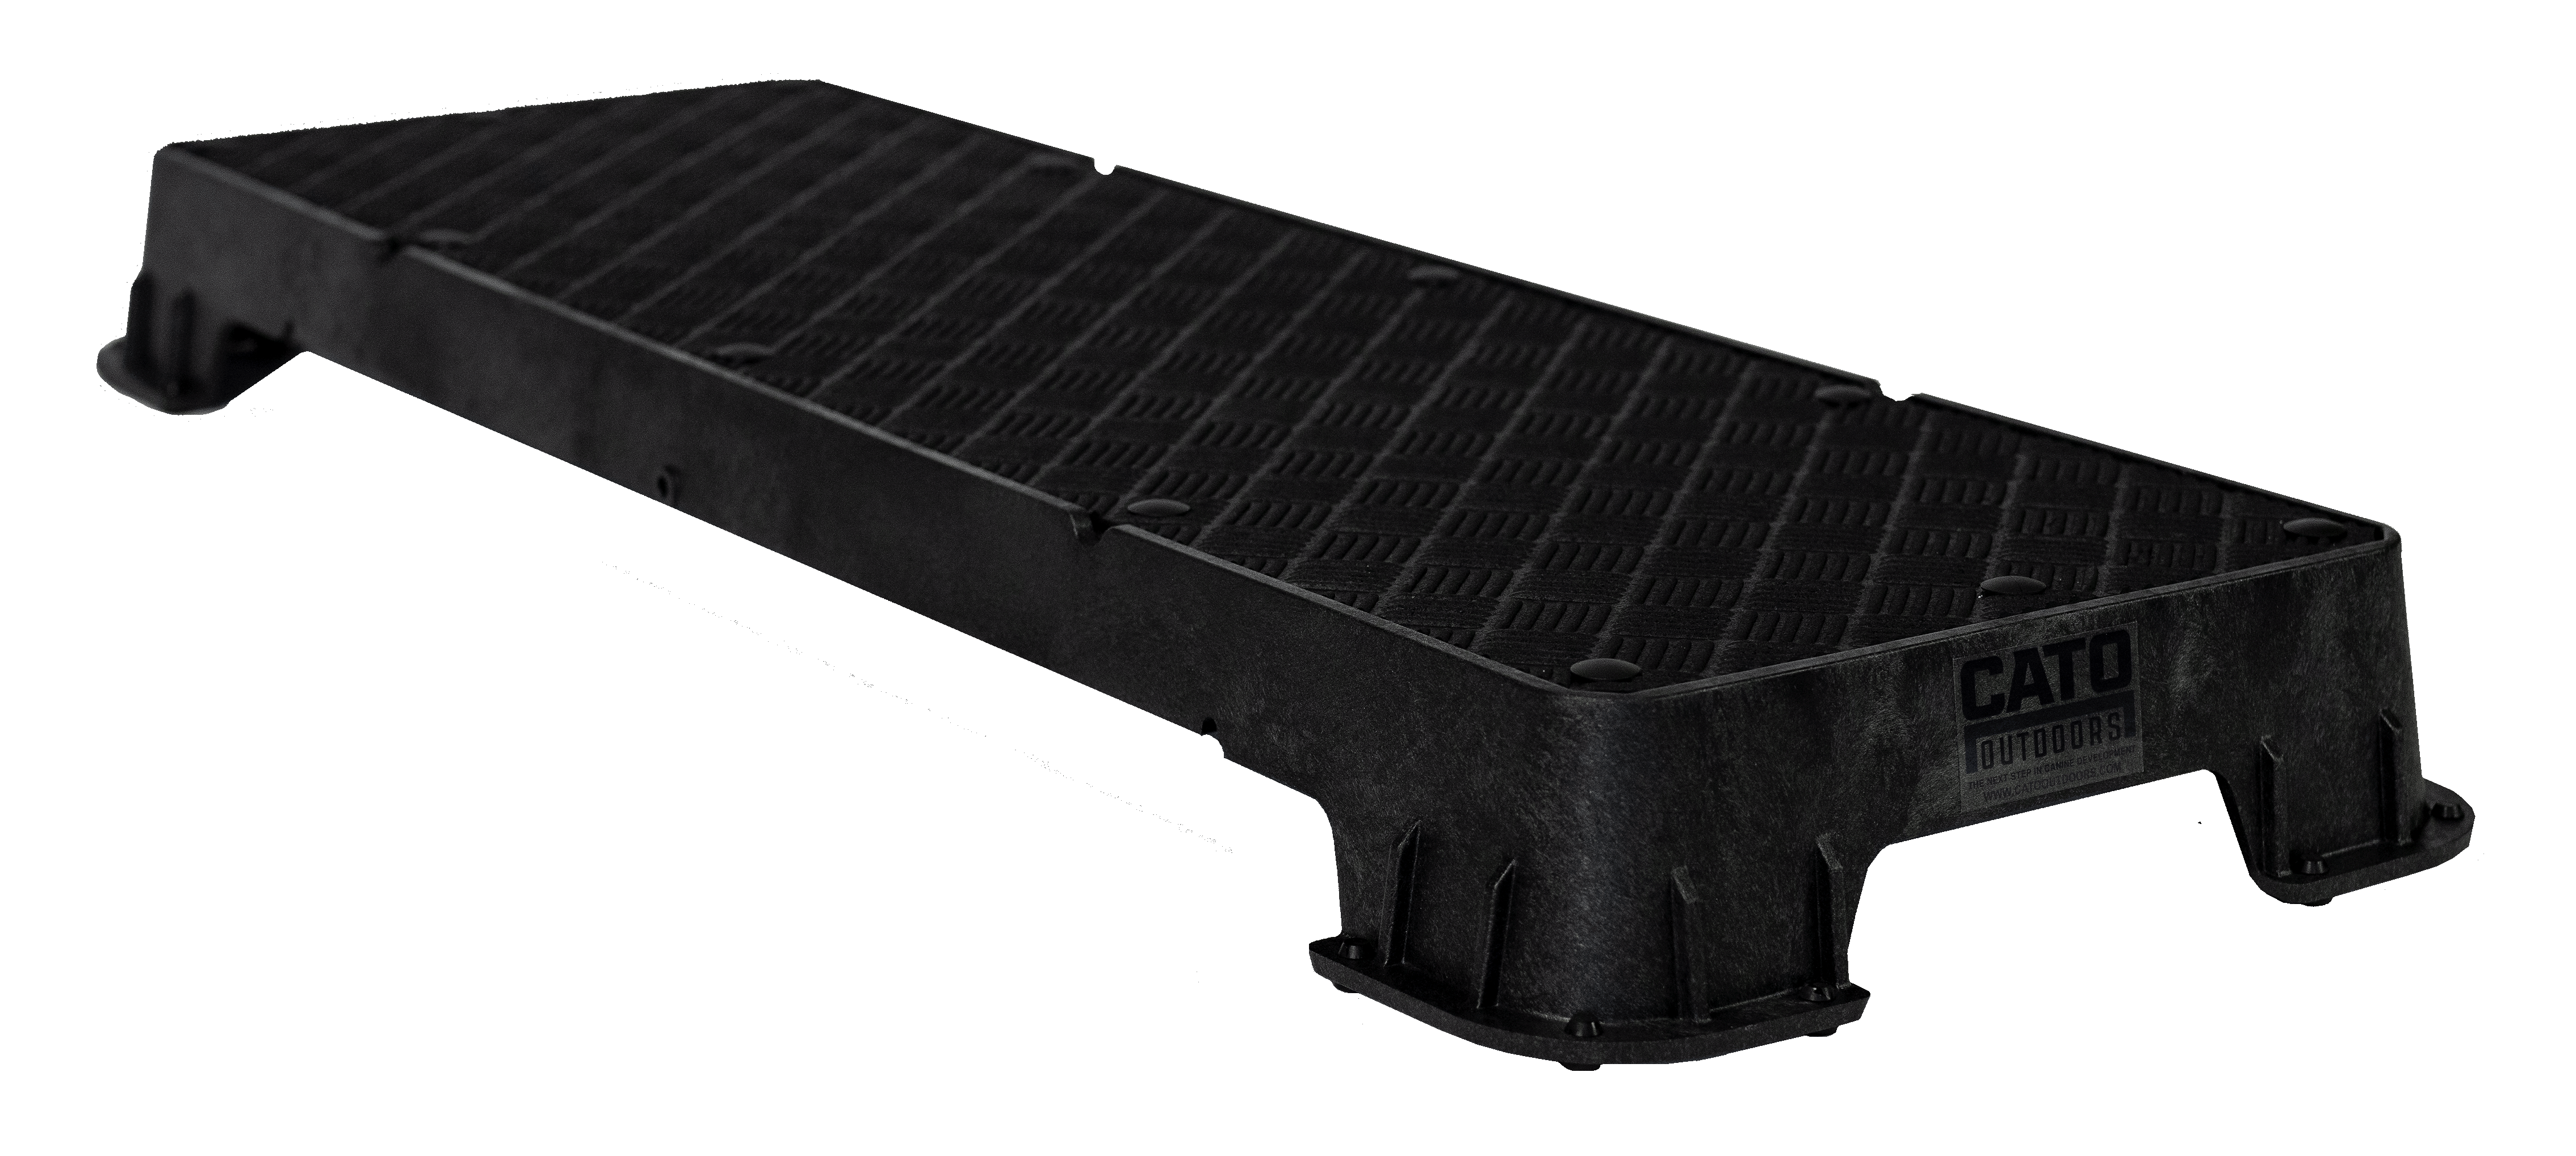 Cato Plank XL Platform